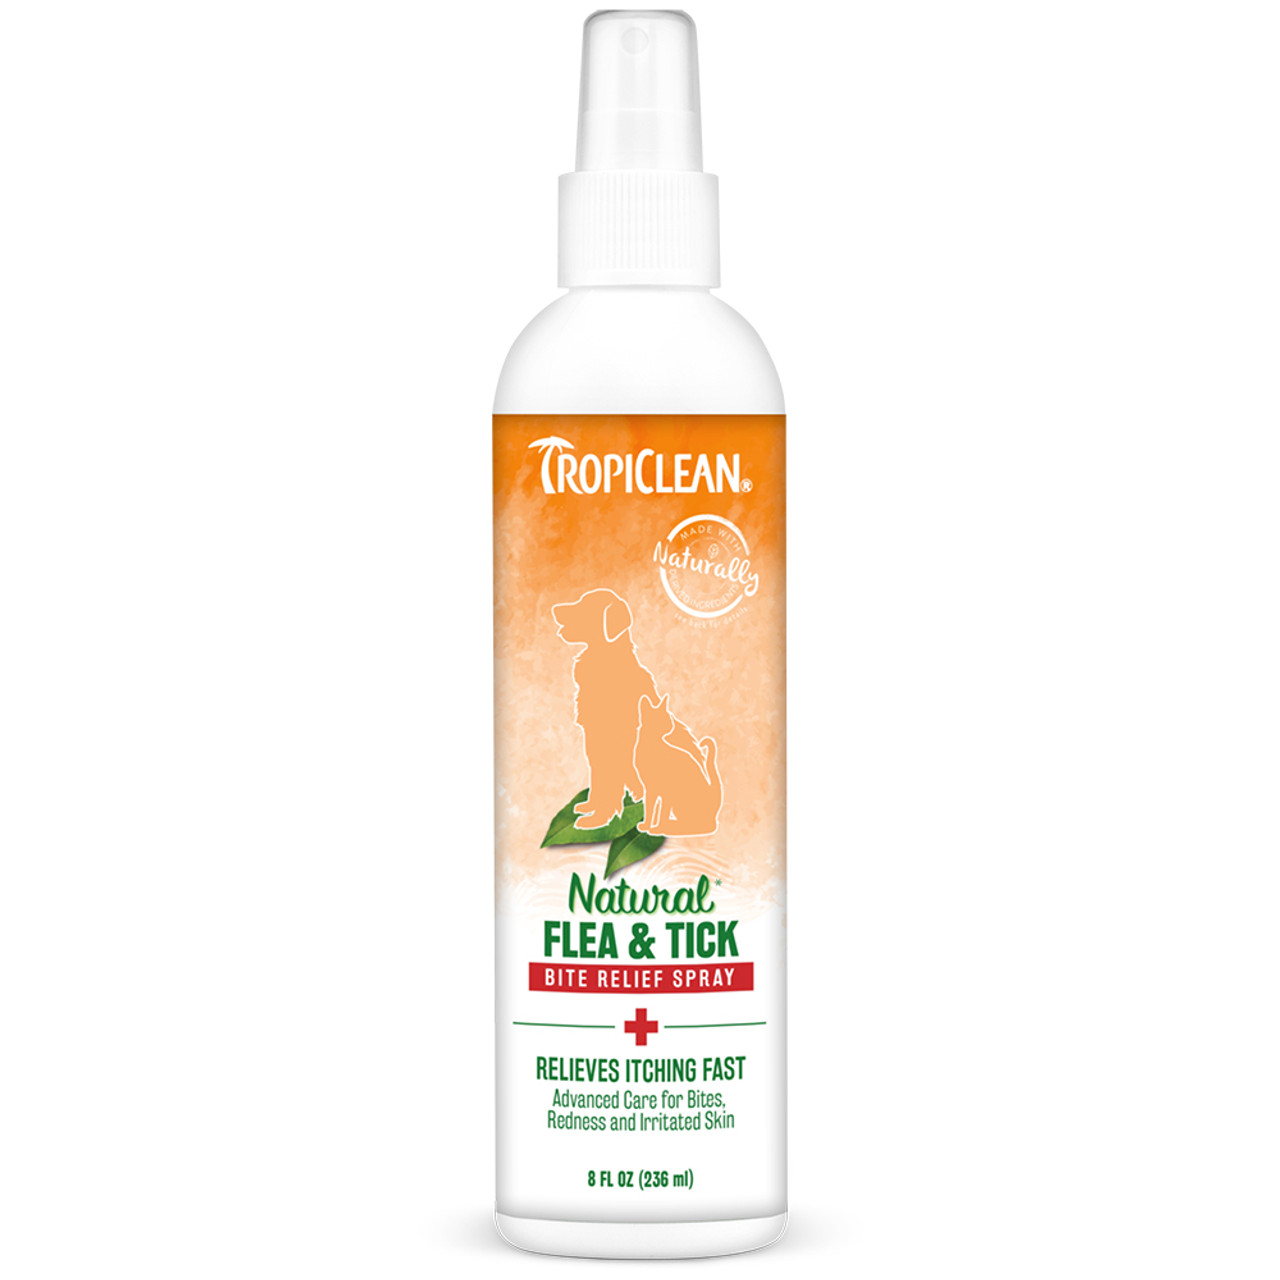 TropiClean Natural Flea & Tick Bite Relief Pet Spray